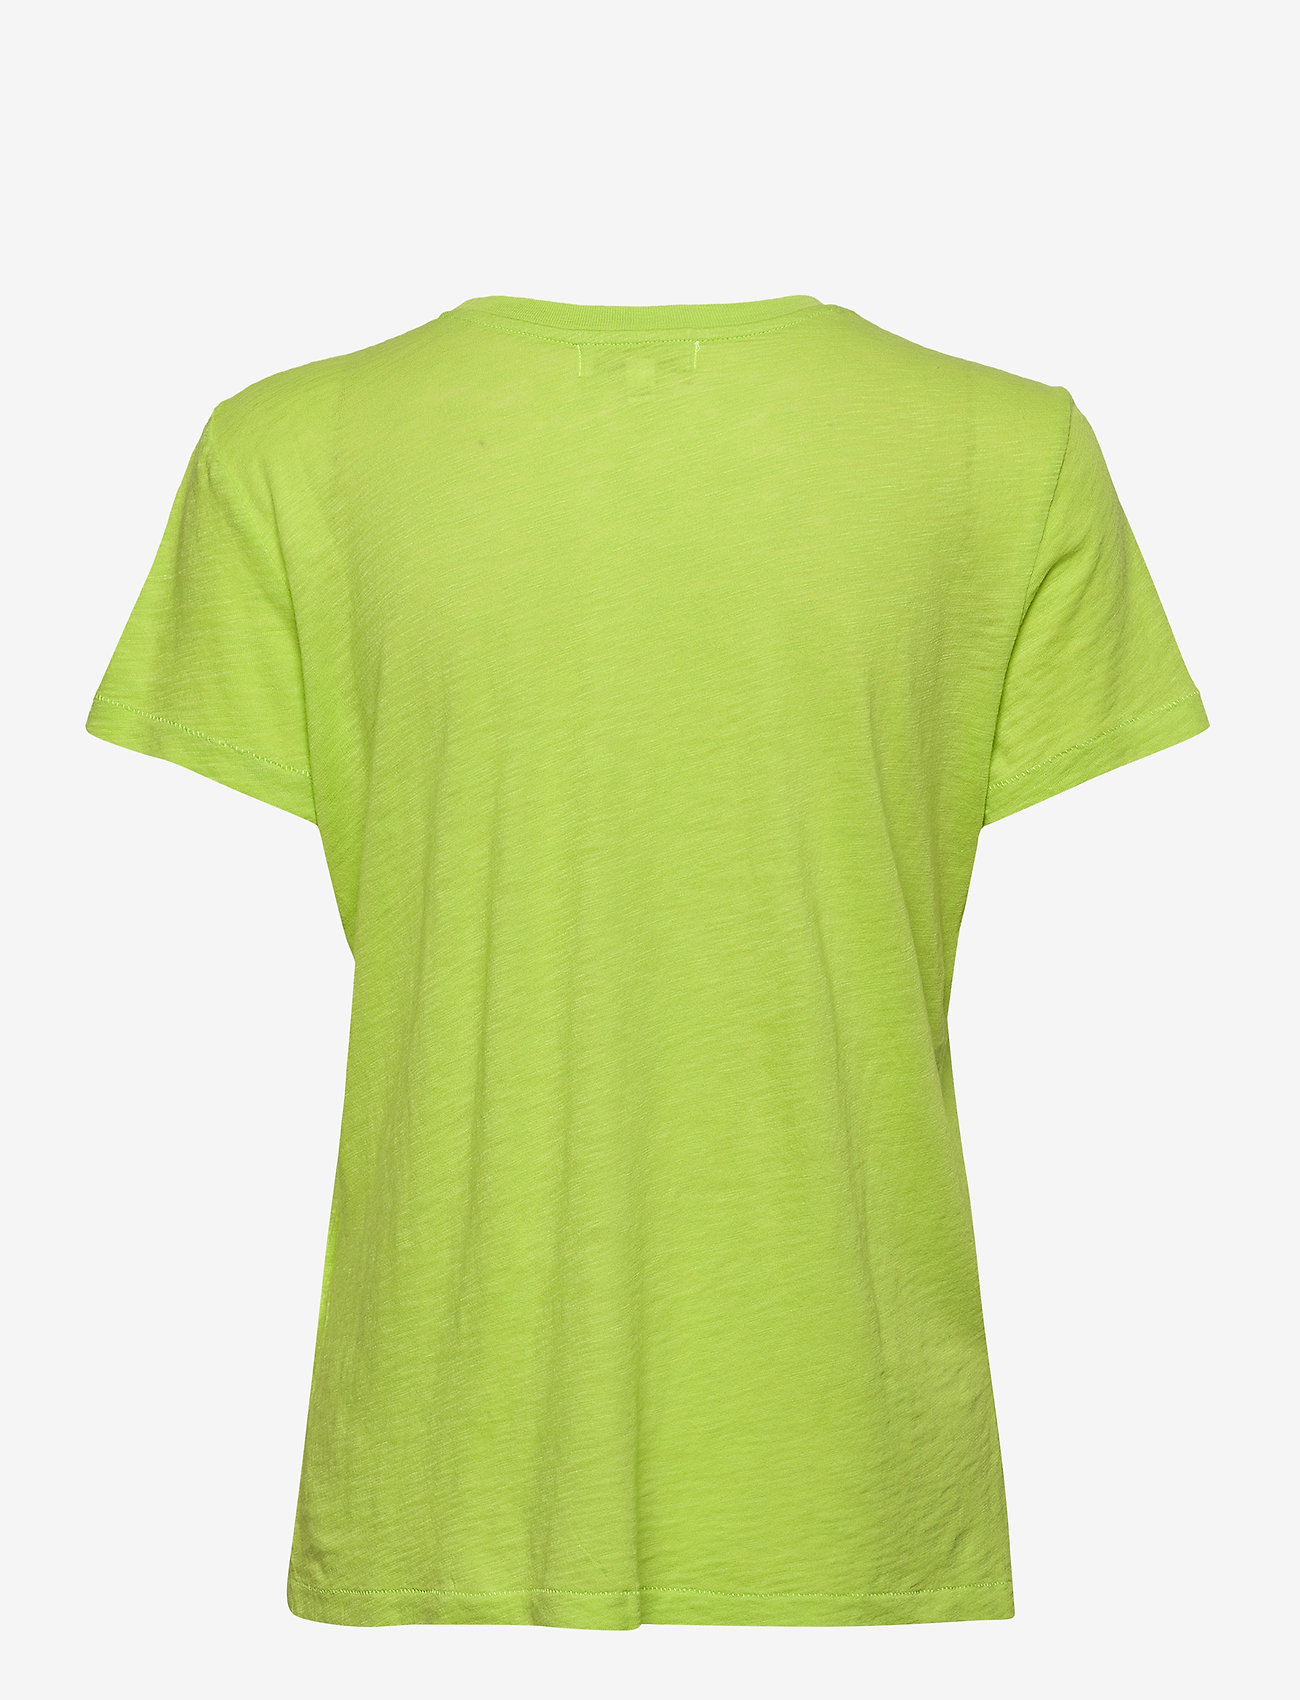 PJ Salvage - s/s shirt - pysjoverdeler - lime green - 1